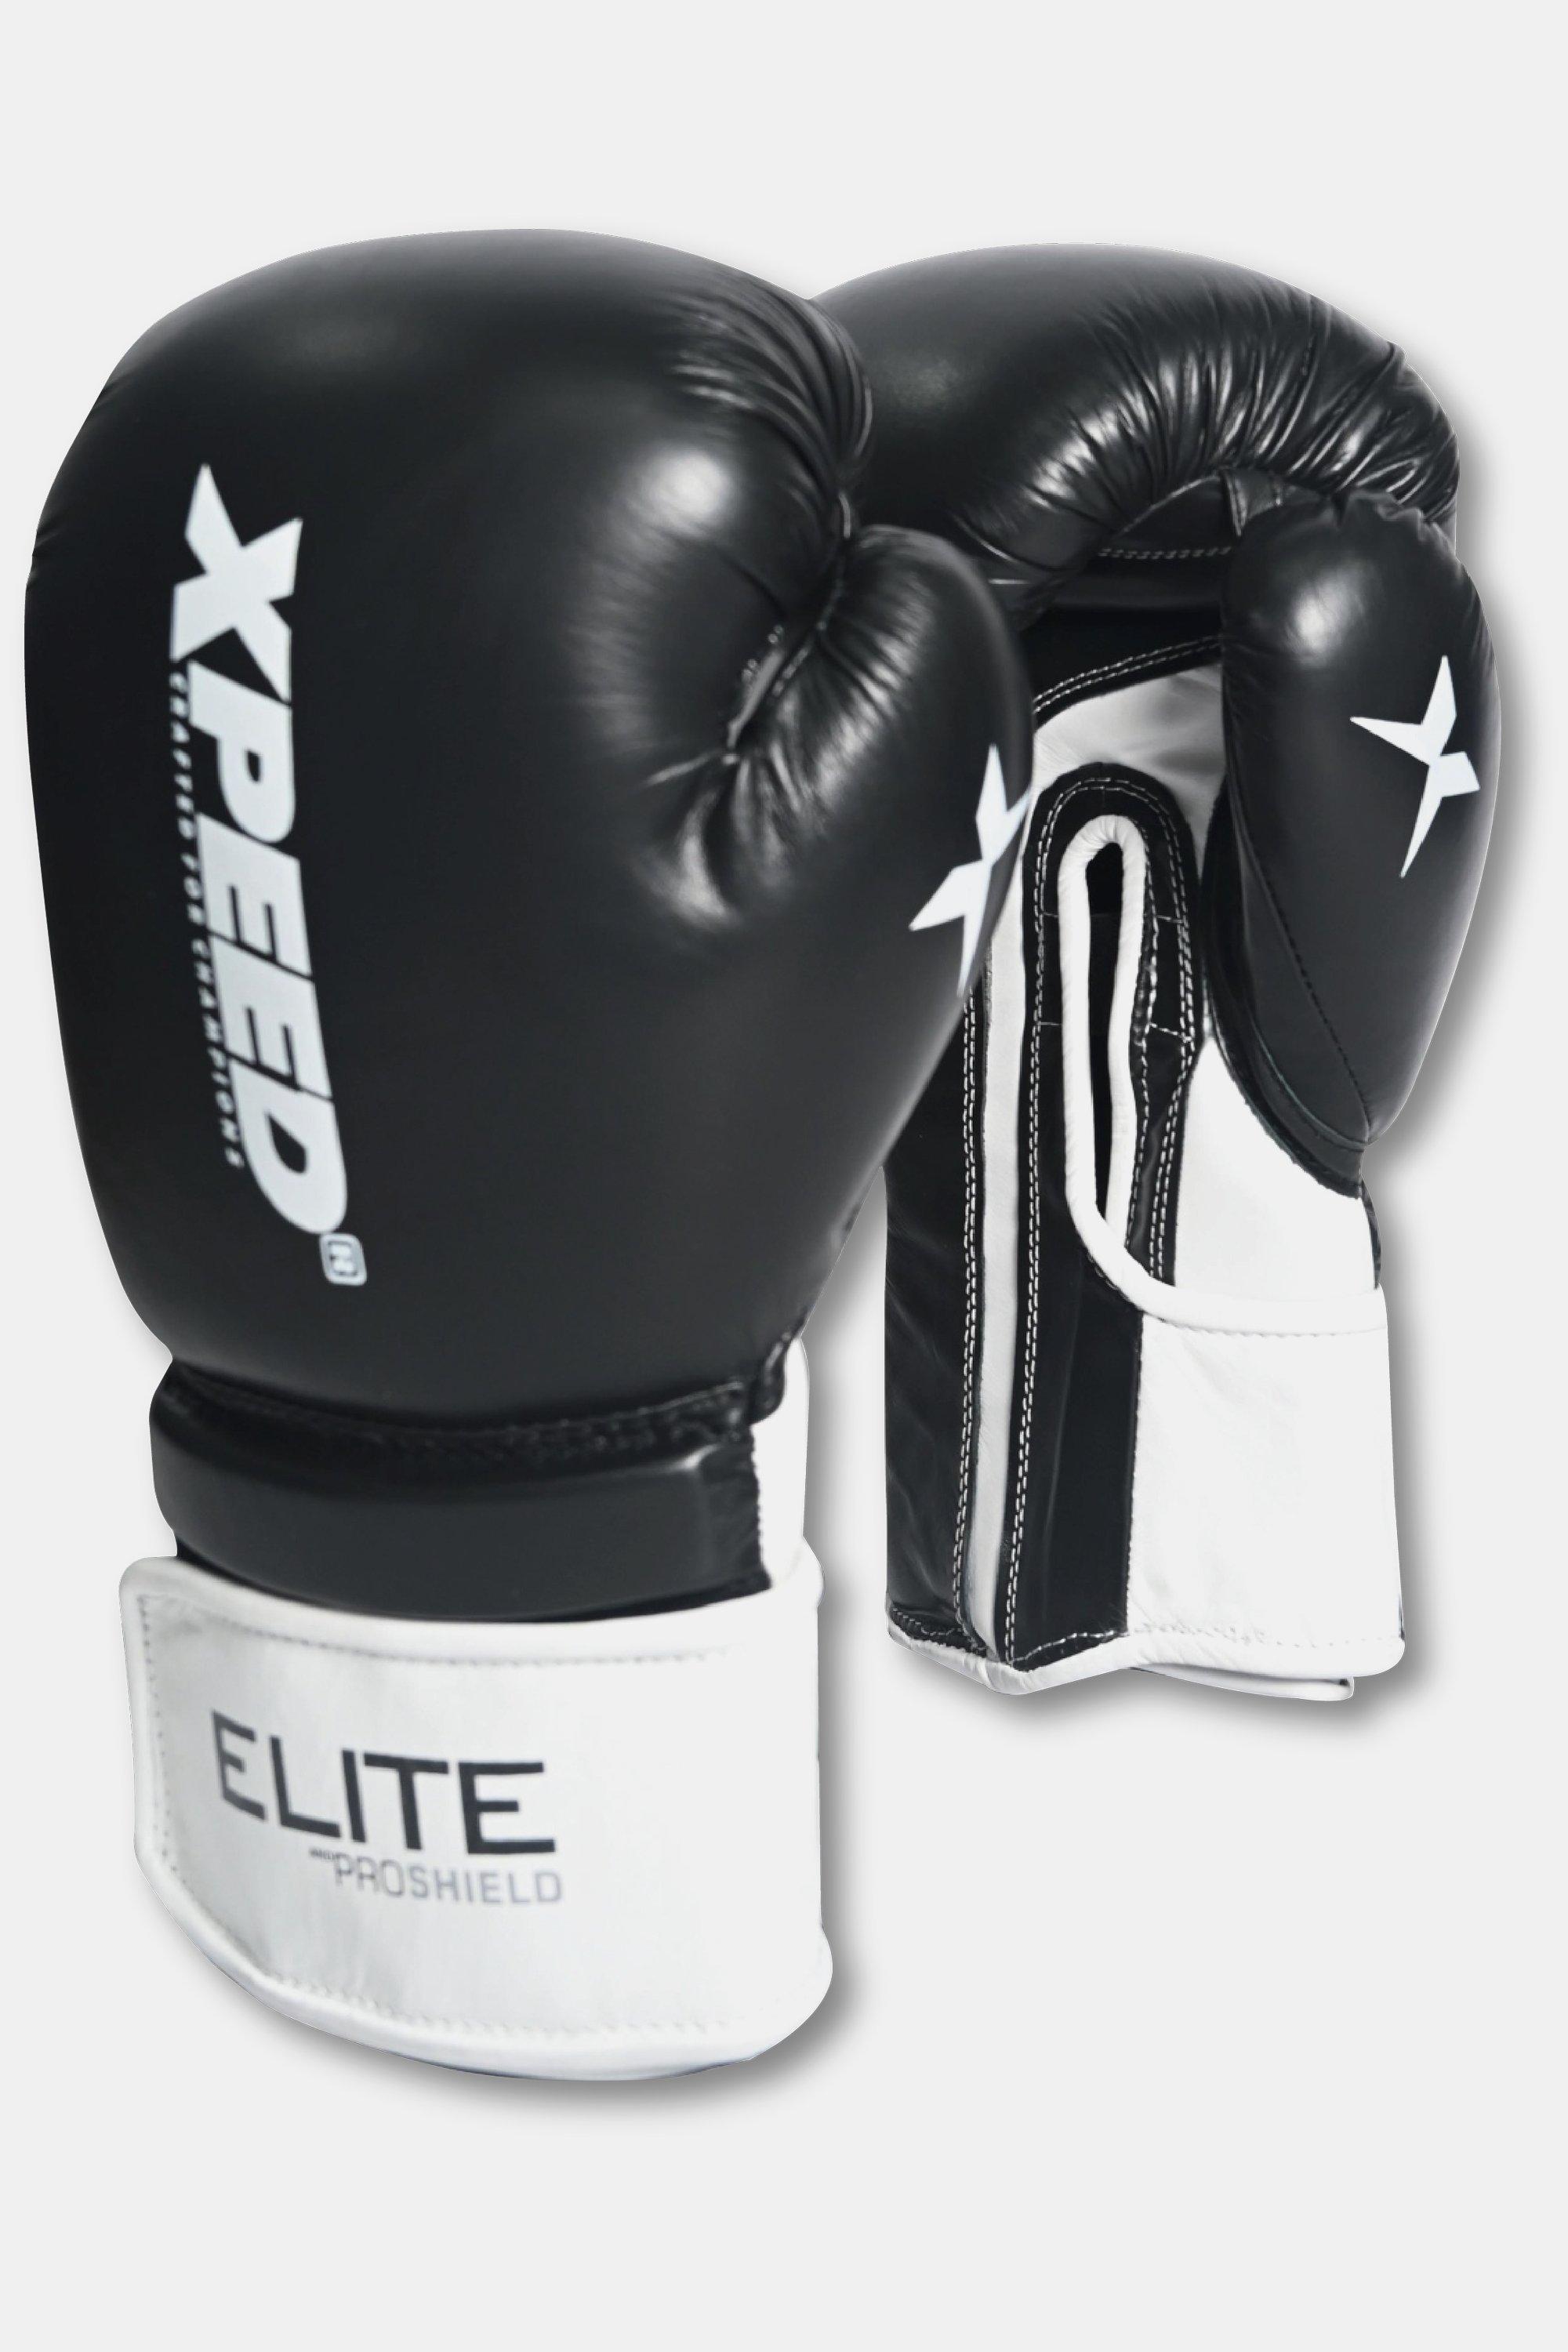 VEVOR Training Boxing Ball with Reflex Bar & Gloves Black